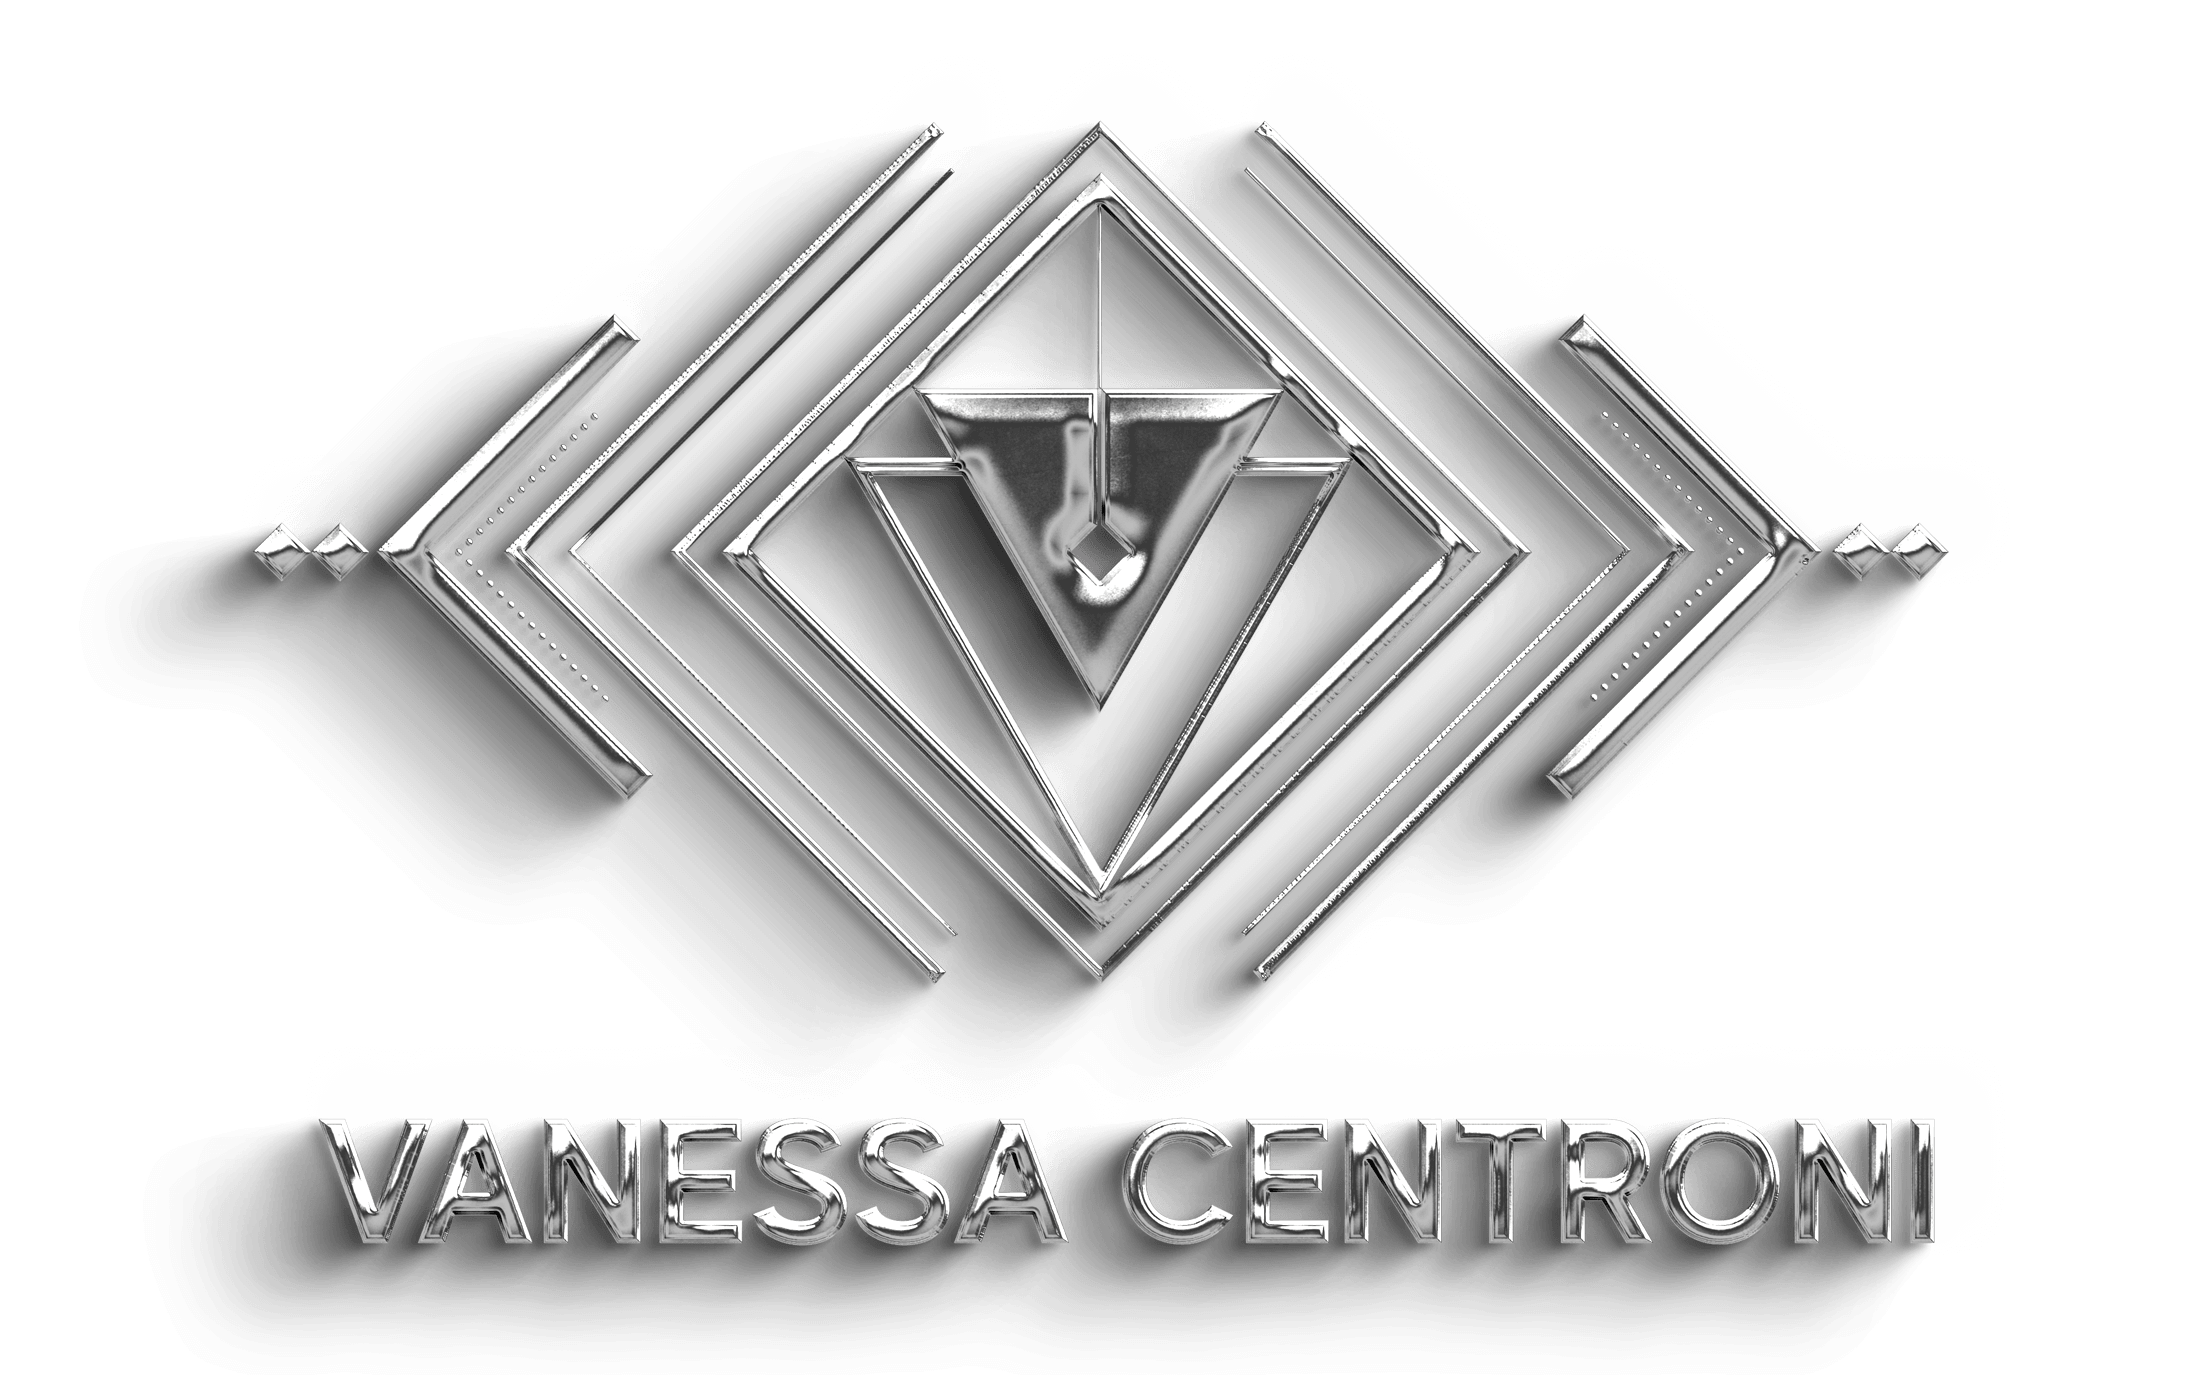 Vanessa-Centroni-logo-nxt-branding